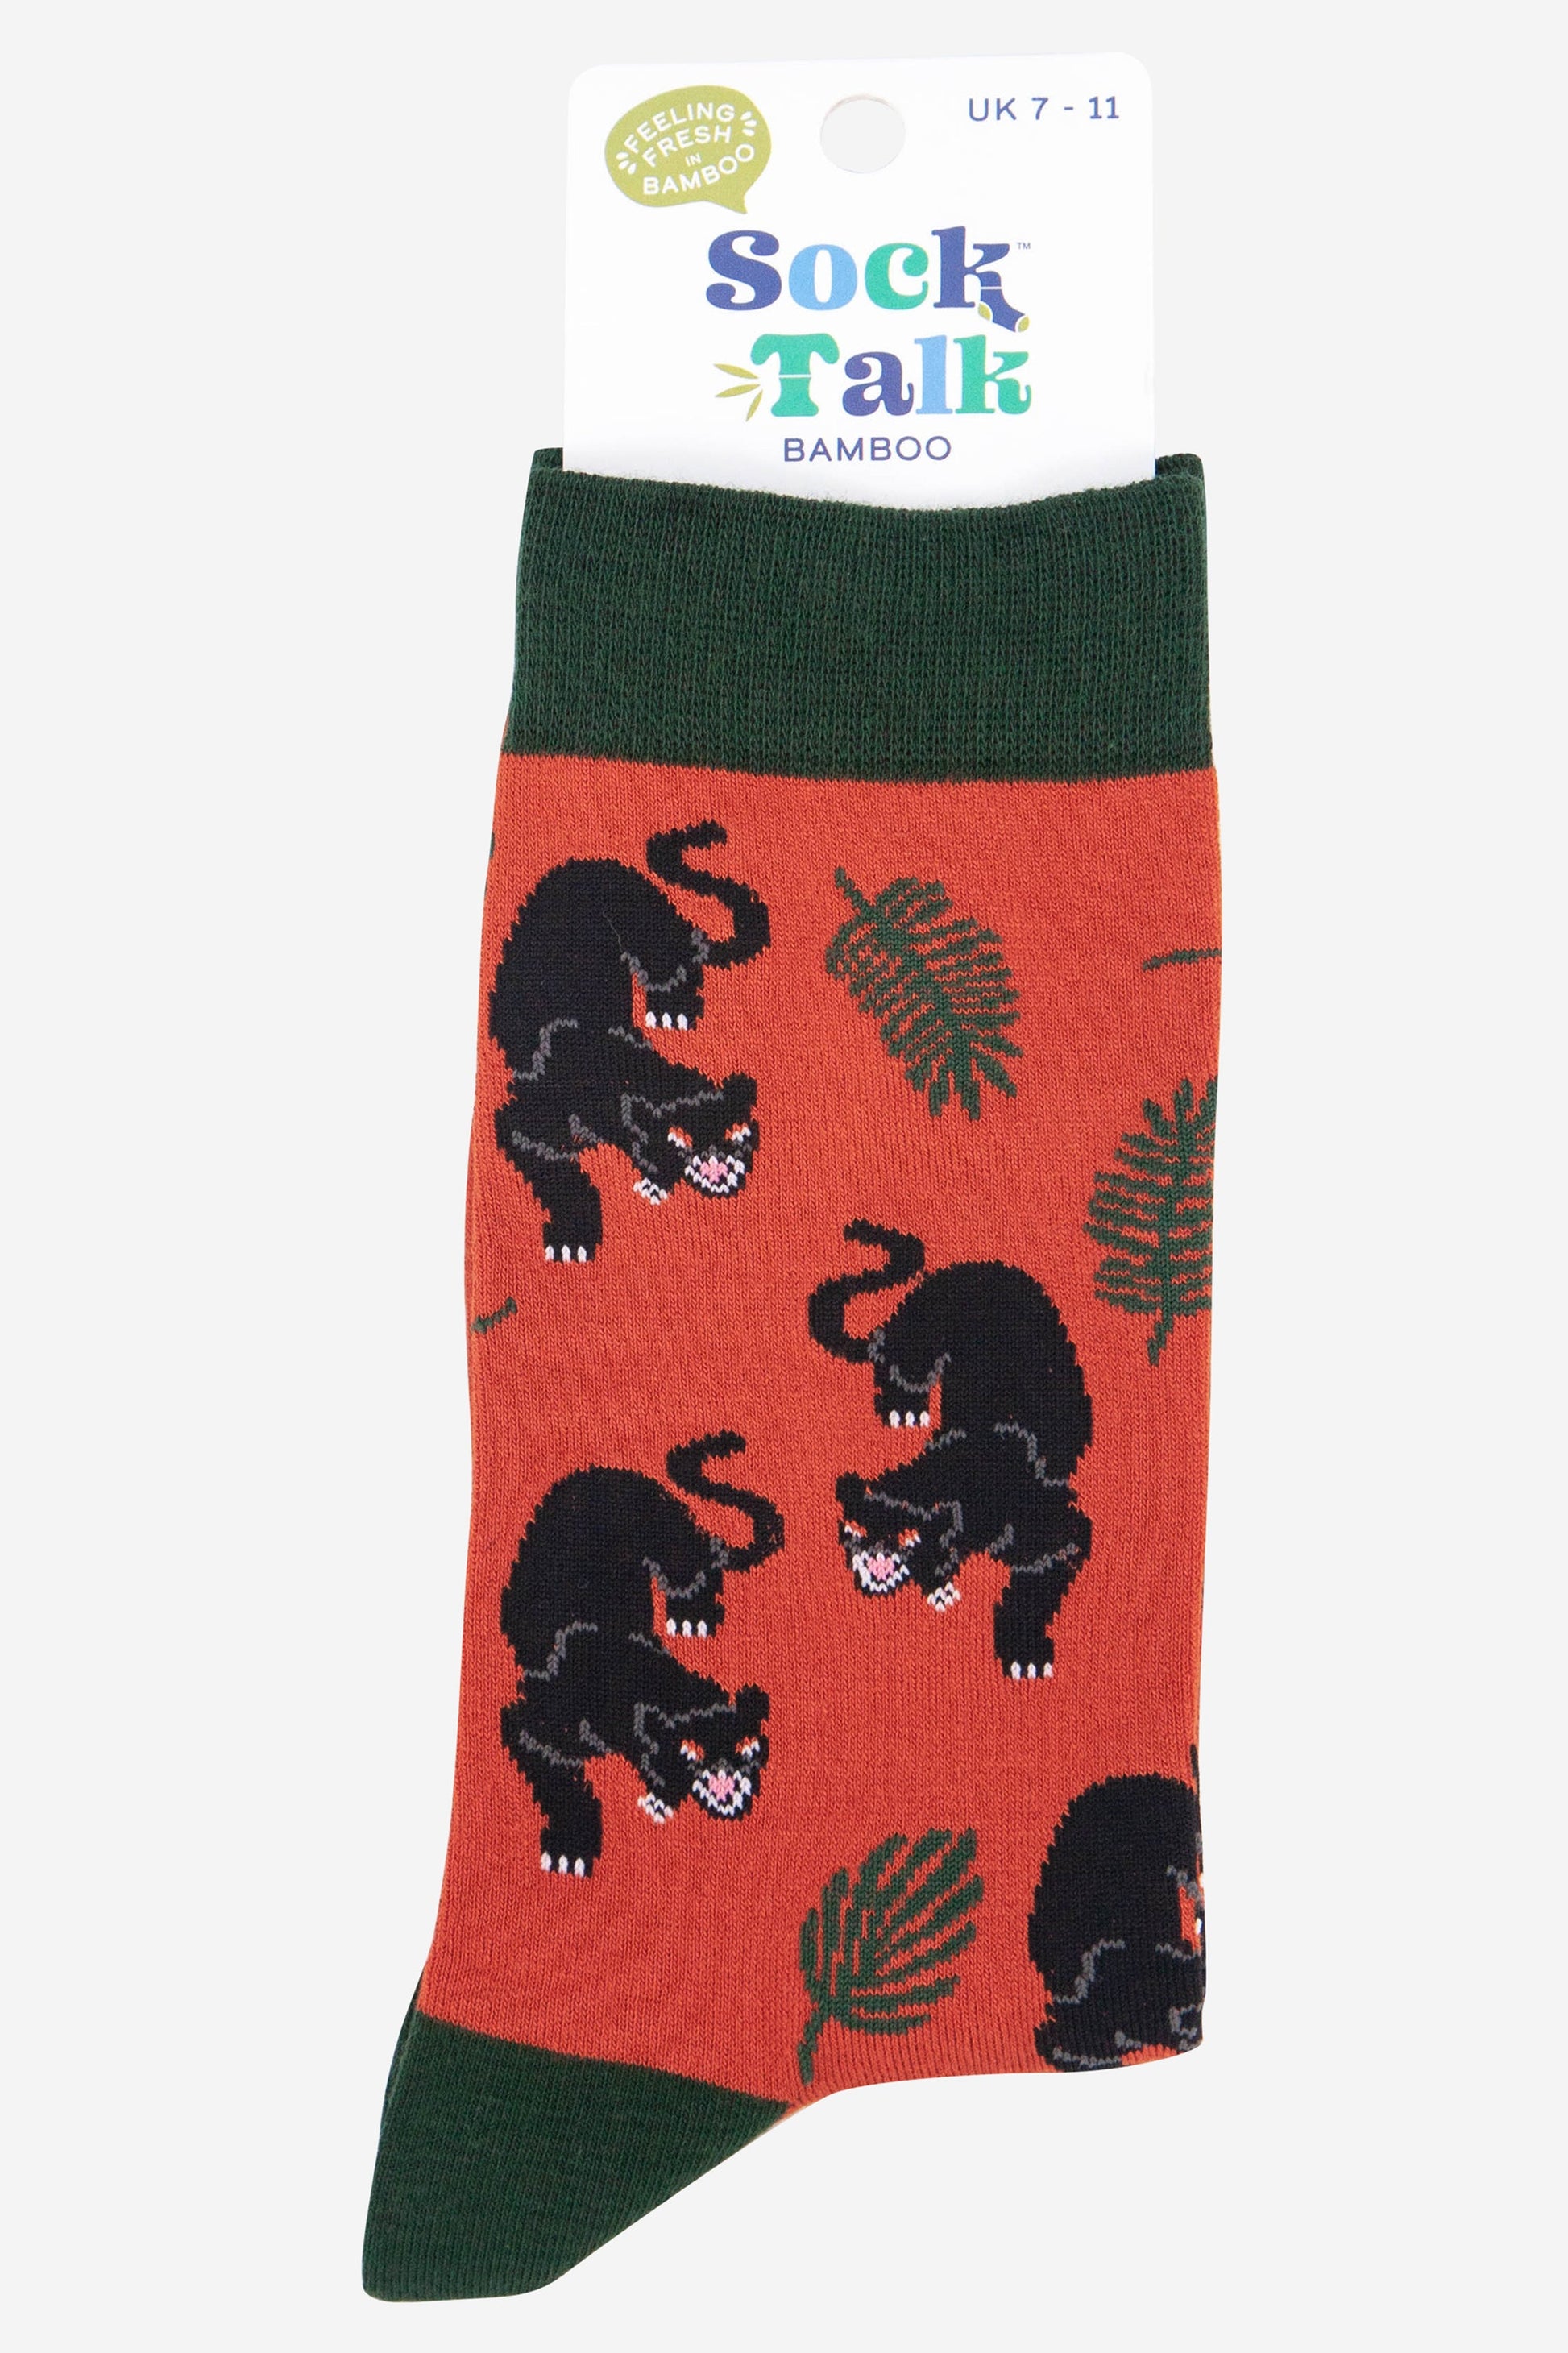 mens black panther and jungle leaf print bamboo socks in orange uk size 7-11